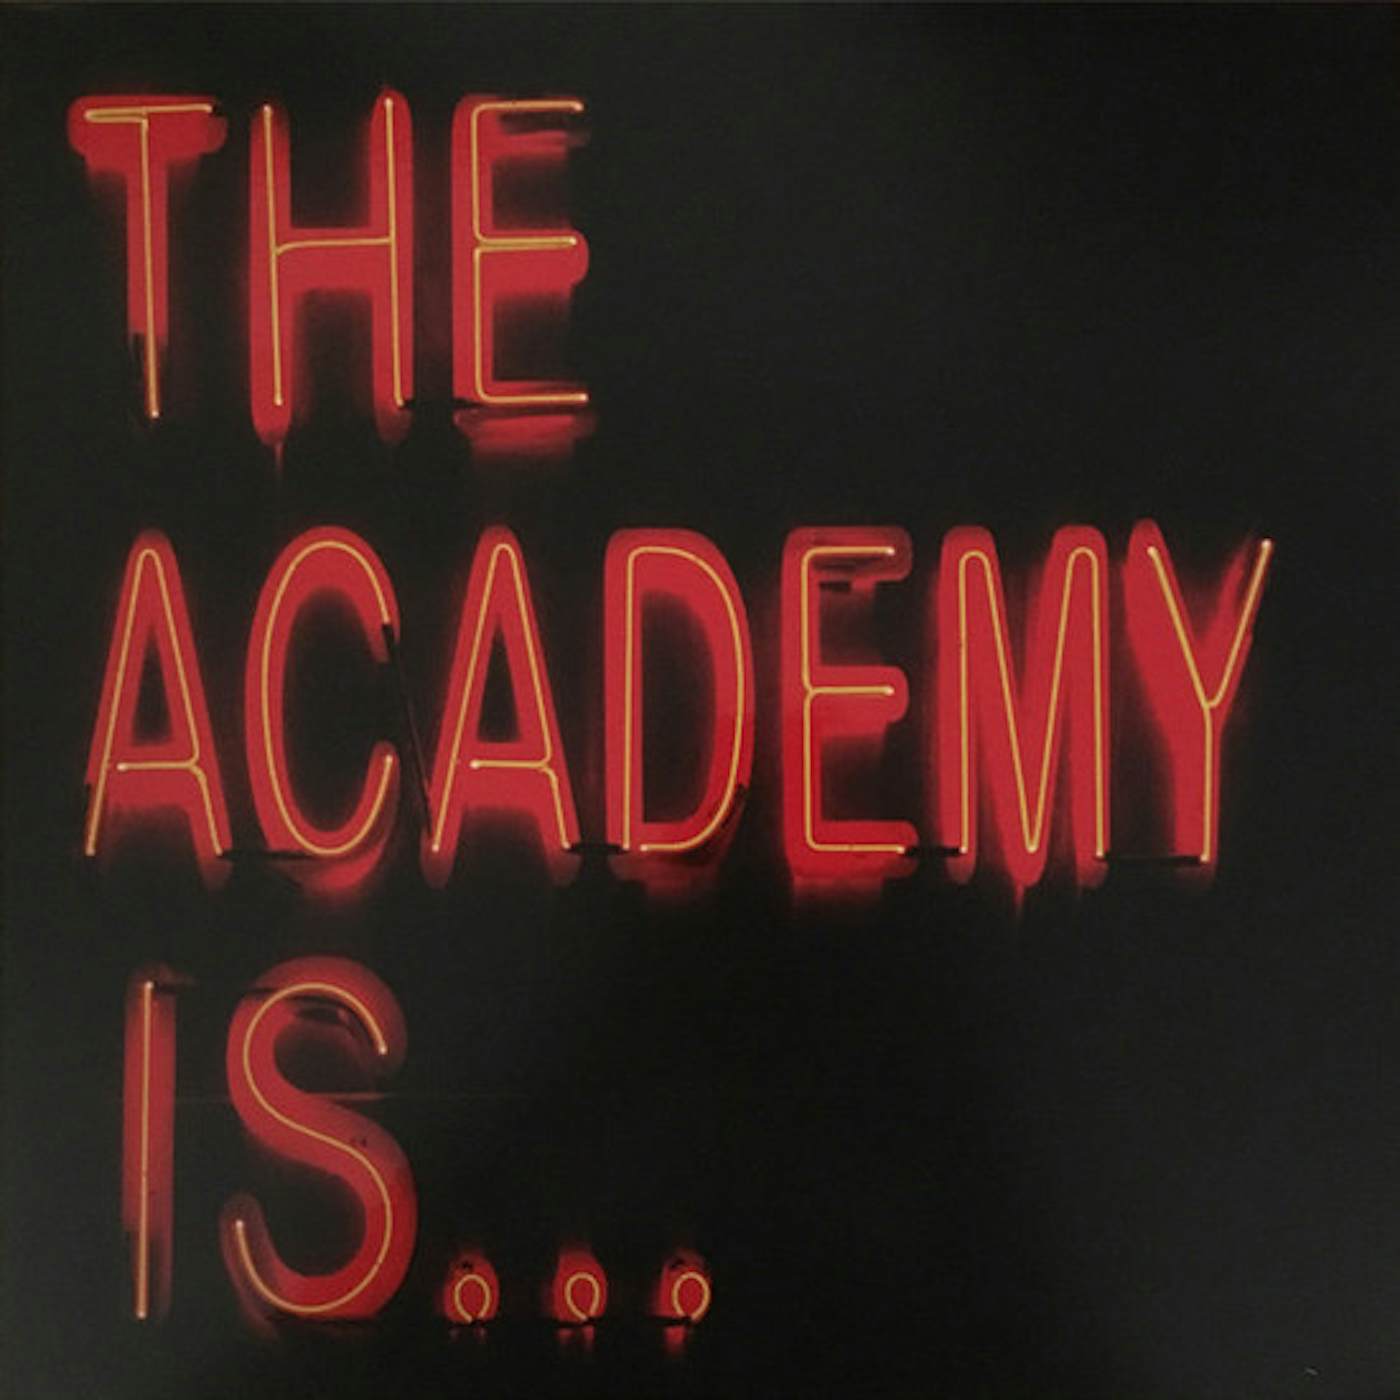 The Academy Is... Santi Vinyl Record